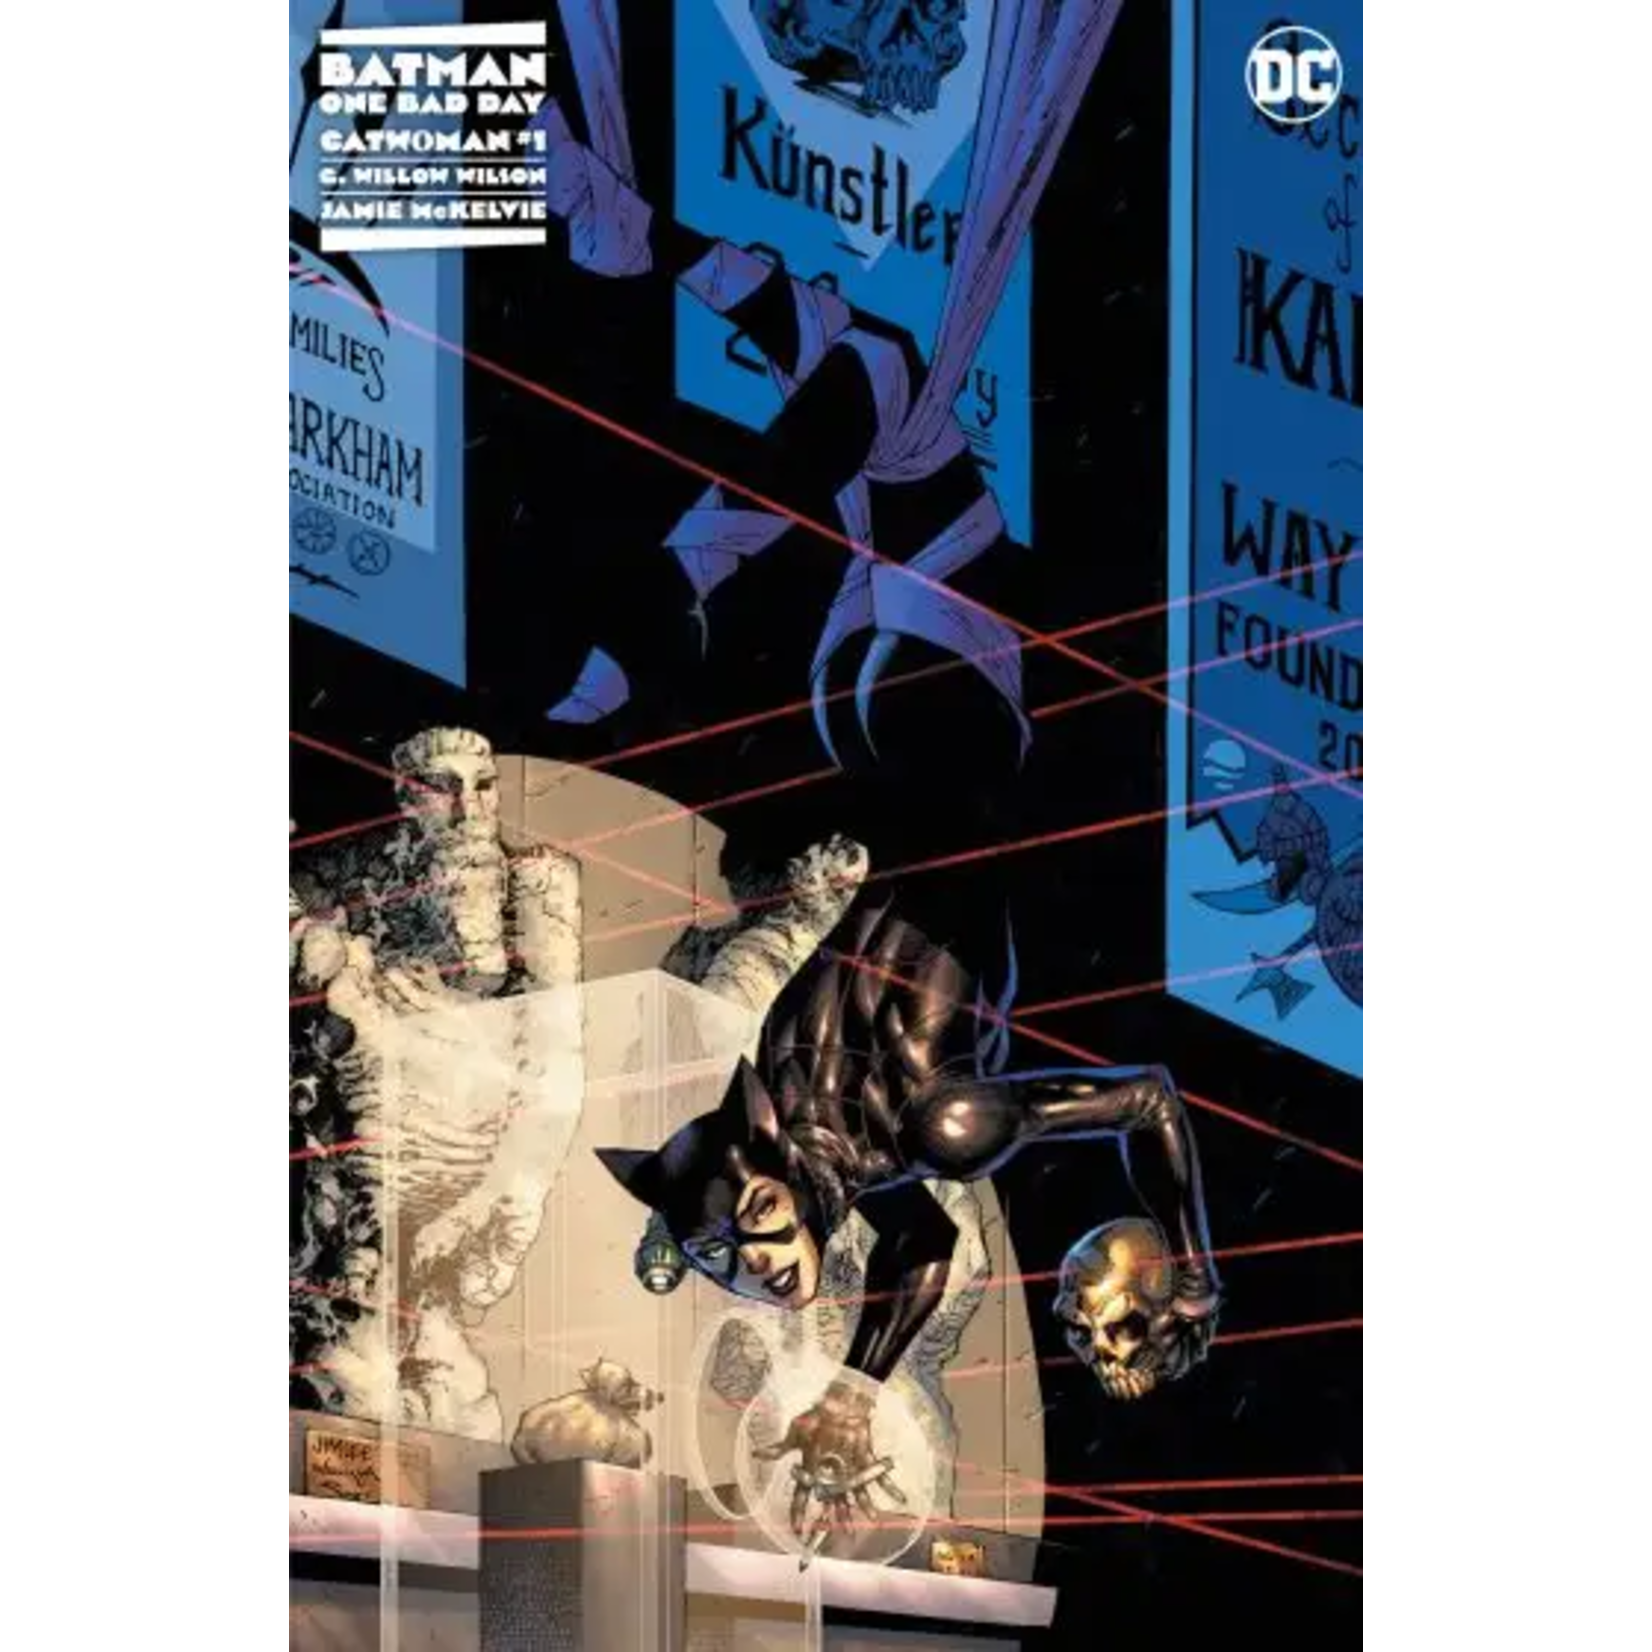 DC Comics BATMAN ONE BAD DAY CATWOMAN #1 CVR B LEE/WILLIAMS